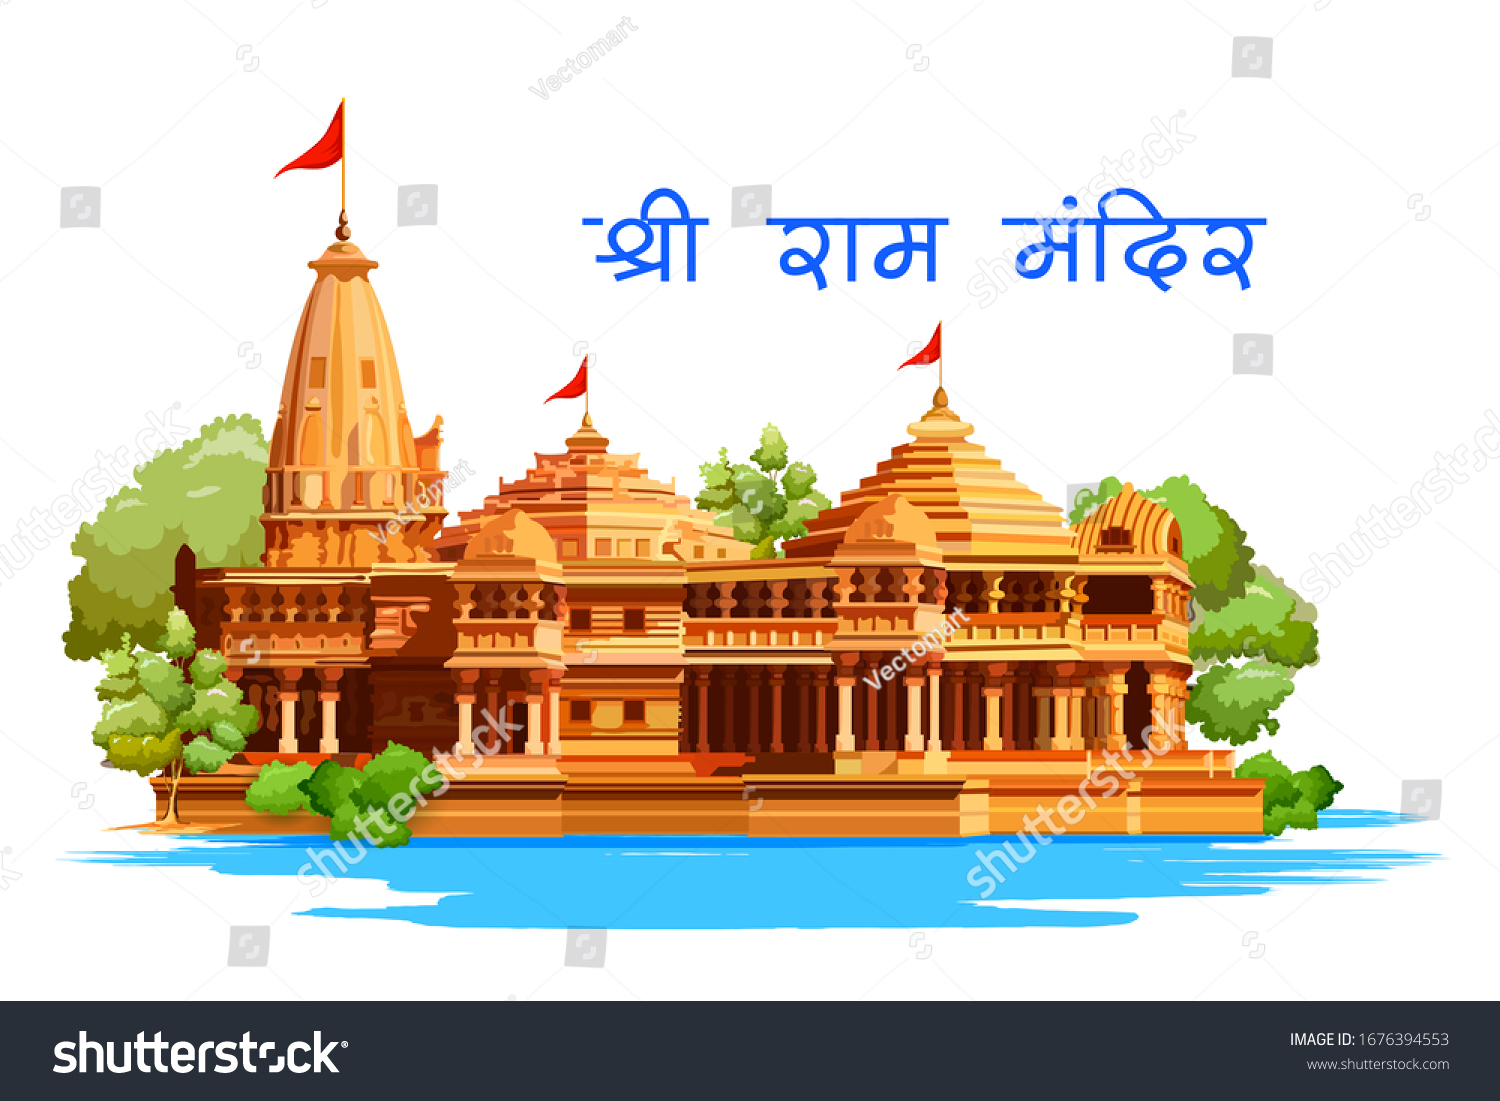 illustration of Hindu mandir of India with Hindi text meaning Shree Ram temple #1676394553